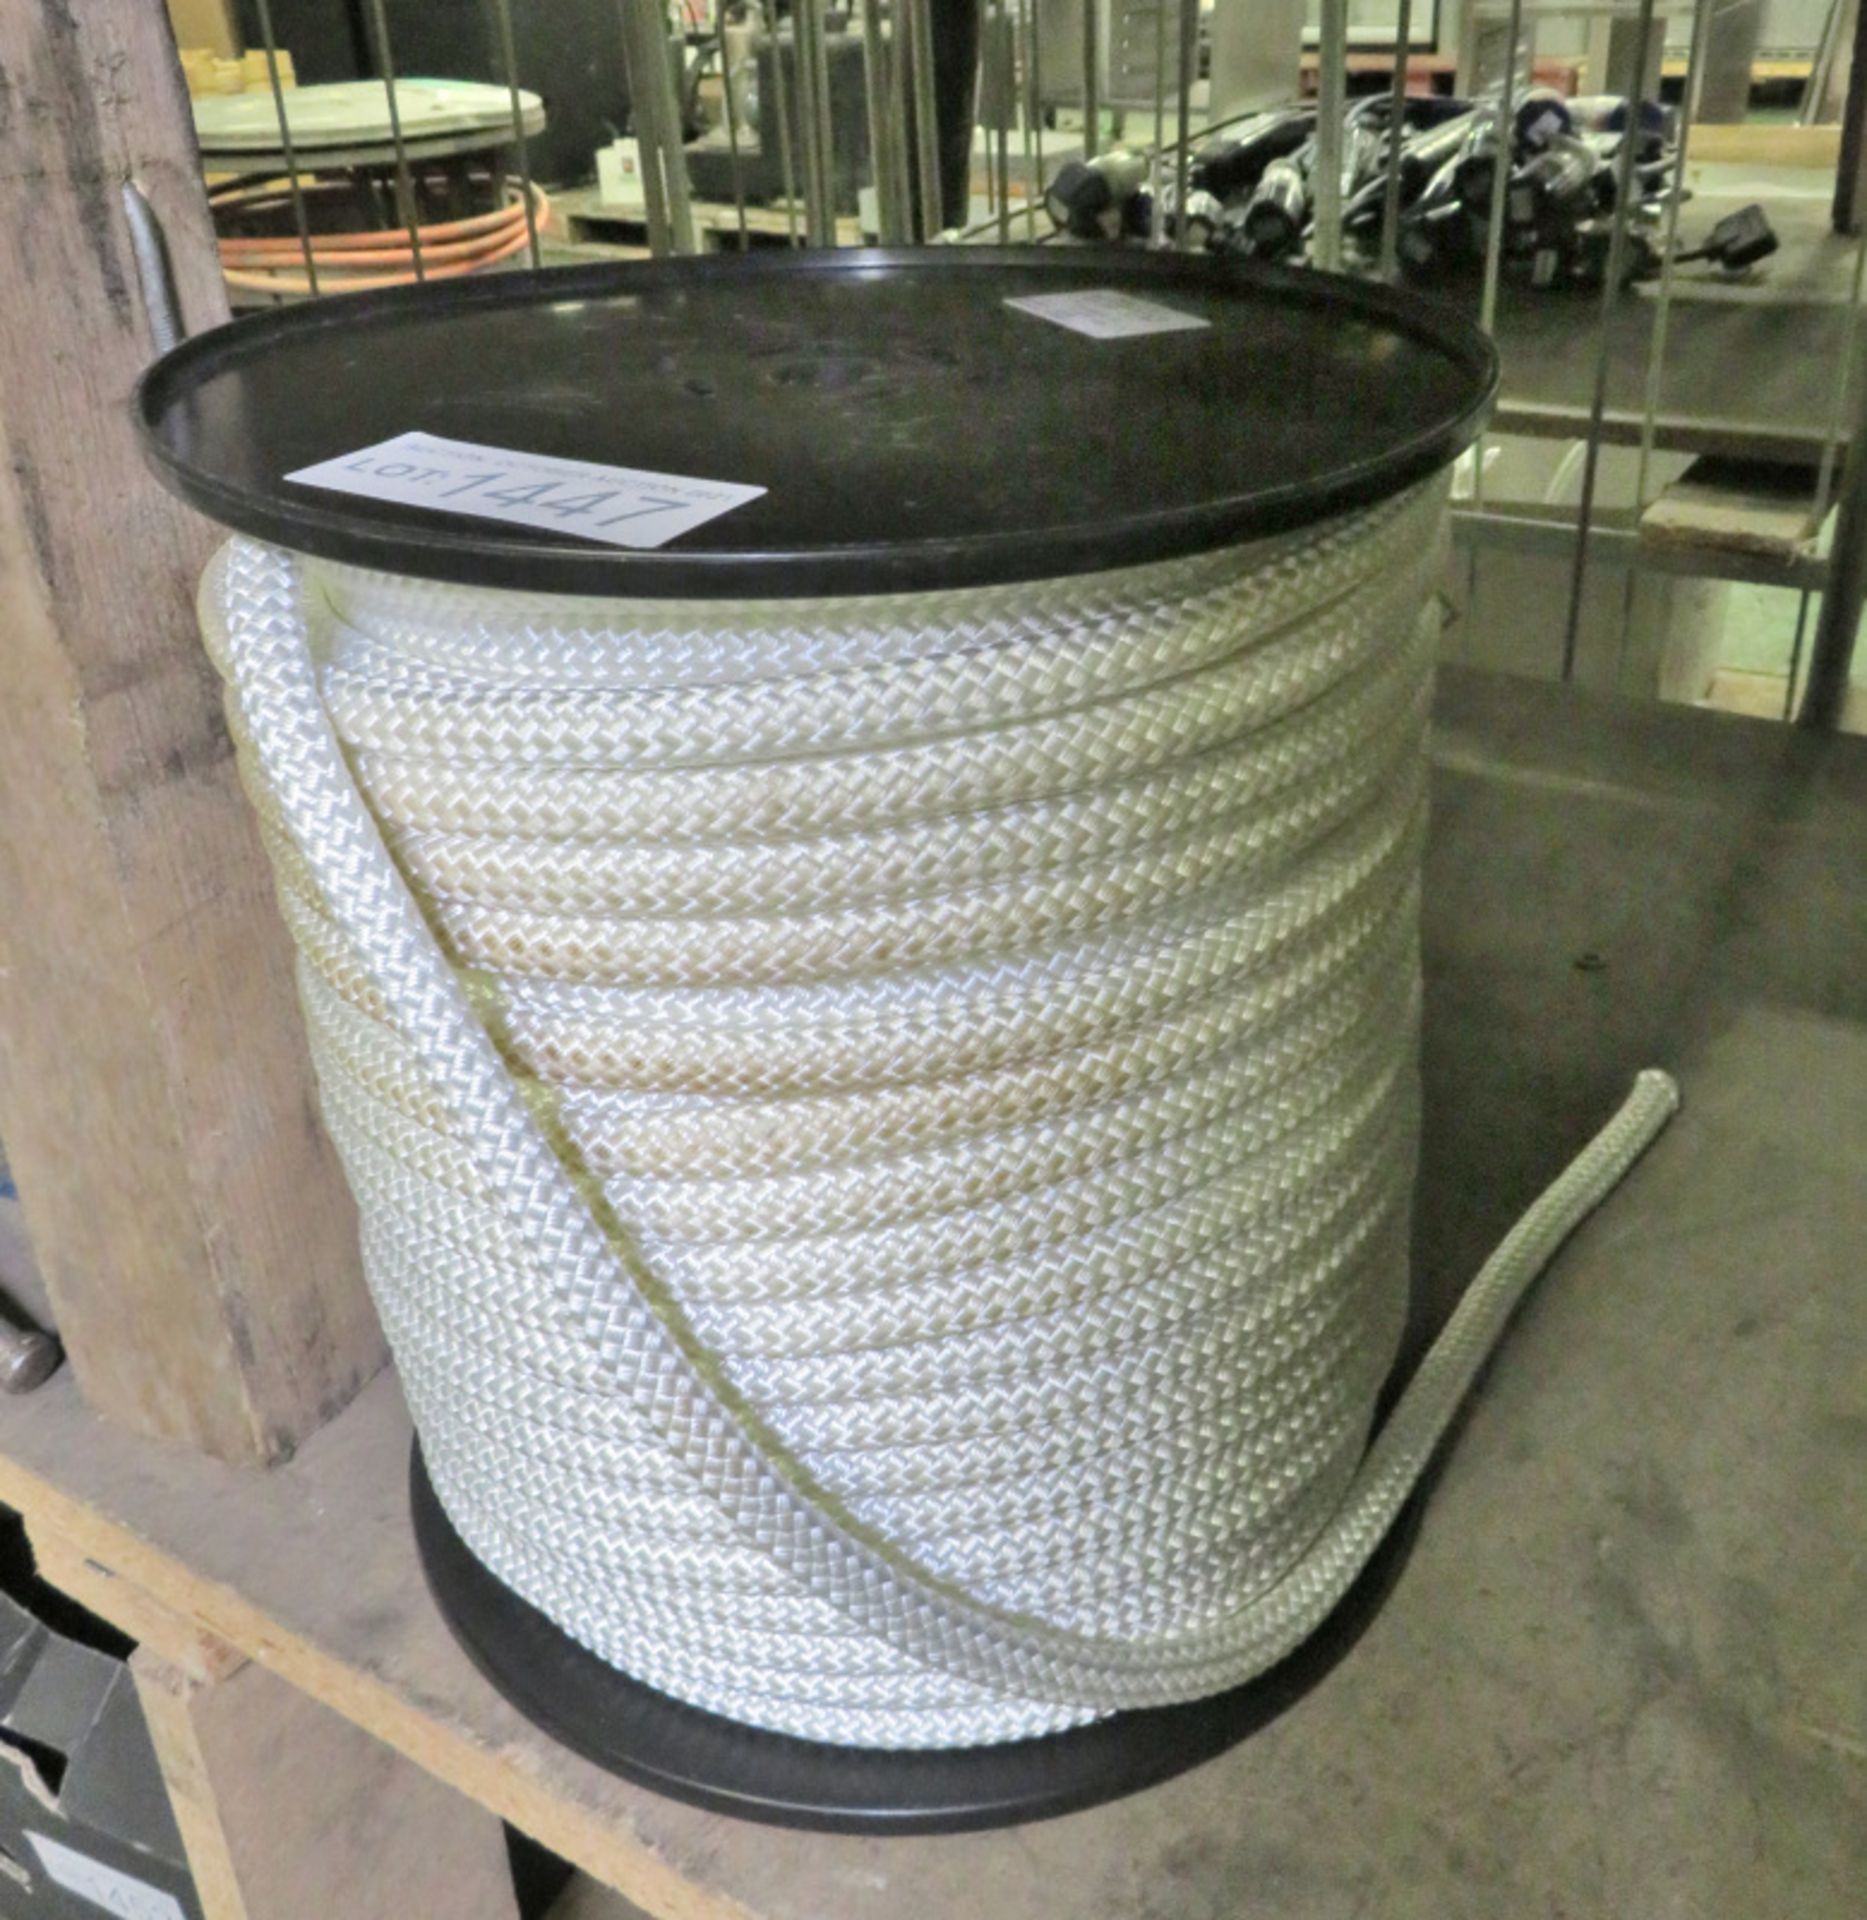 100M Drum of 13mm Halygard Rope - Image 2 of 2